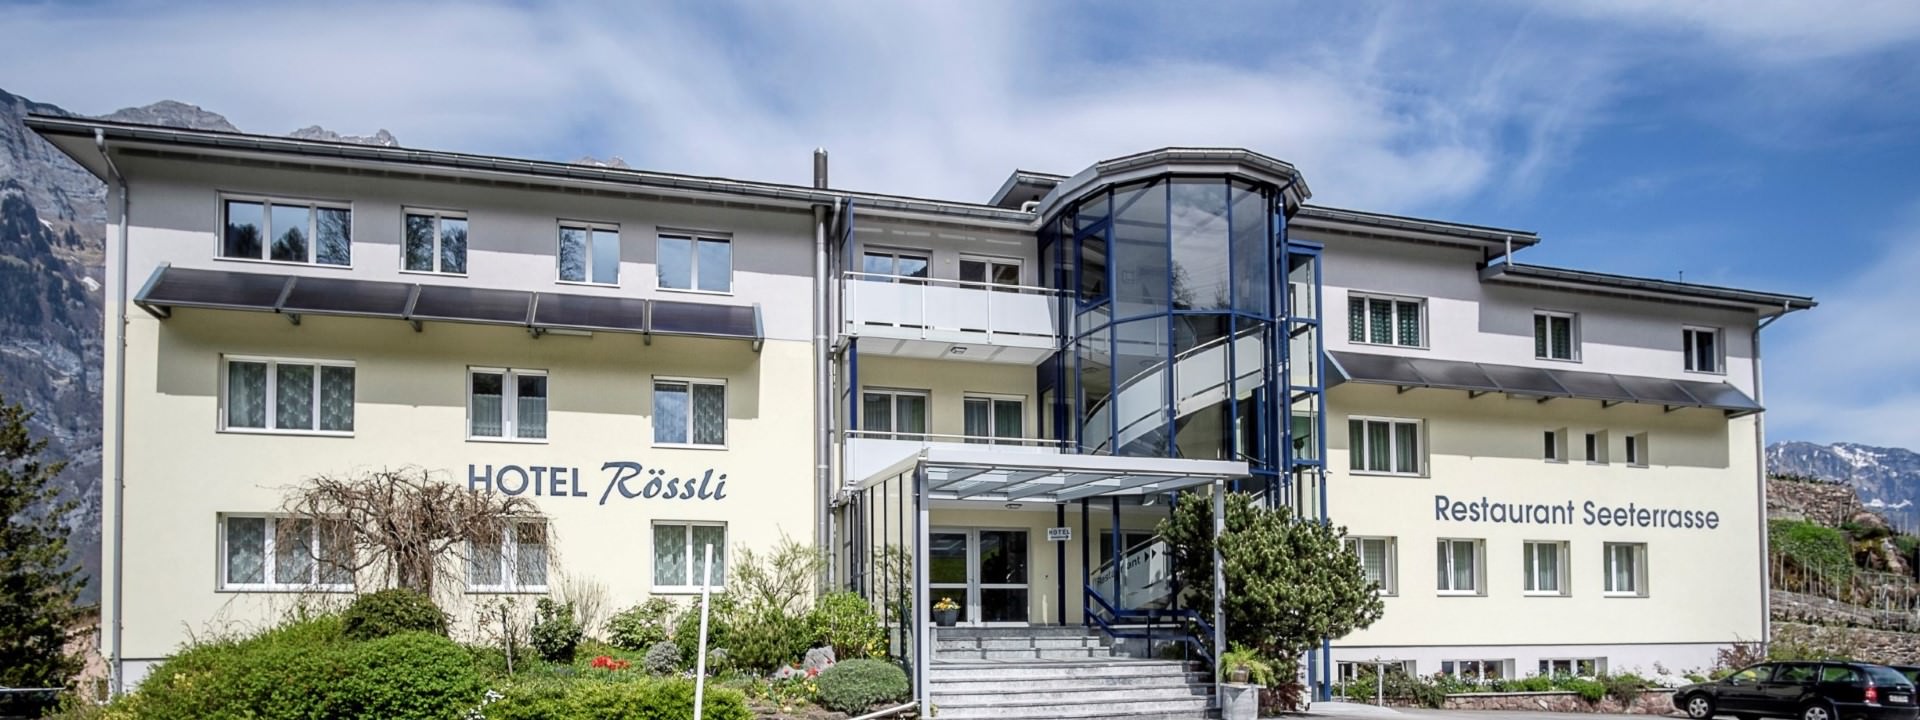 Hotel Rössli in Murg, Hotel Rössli / Schweiz